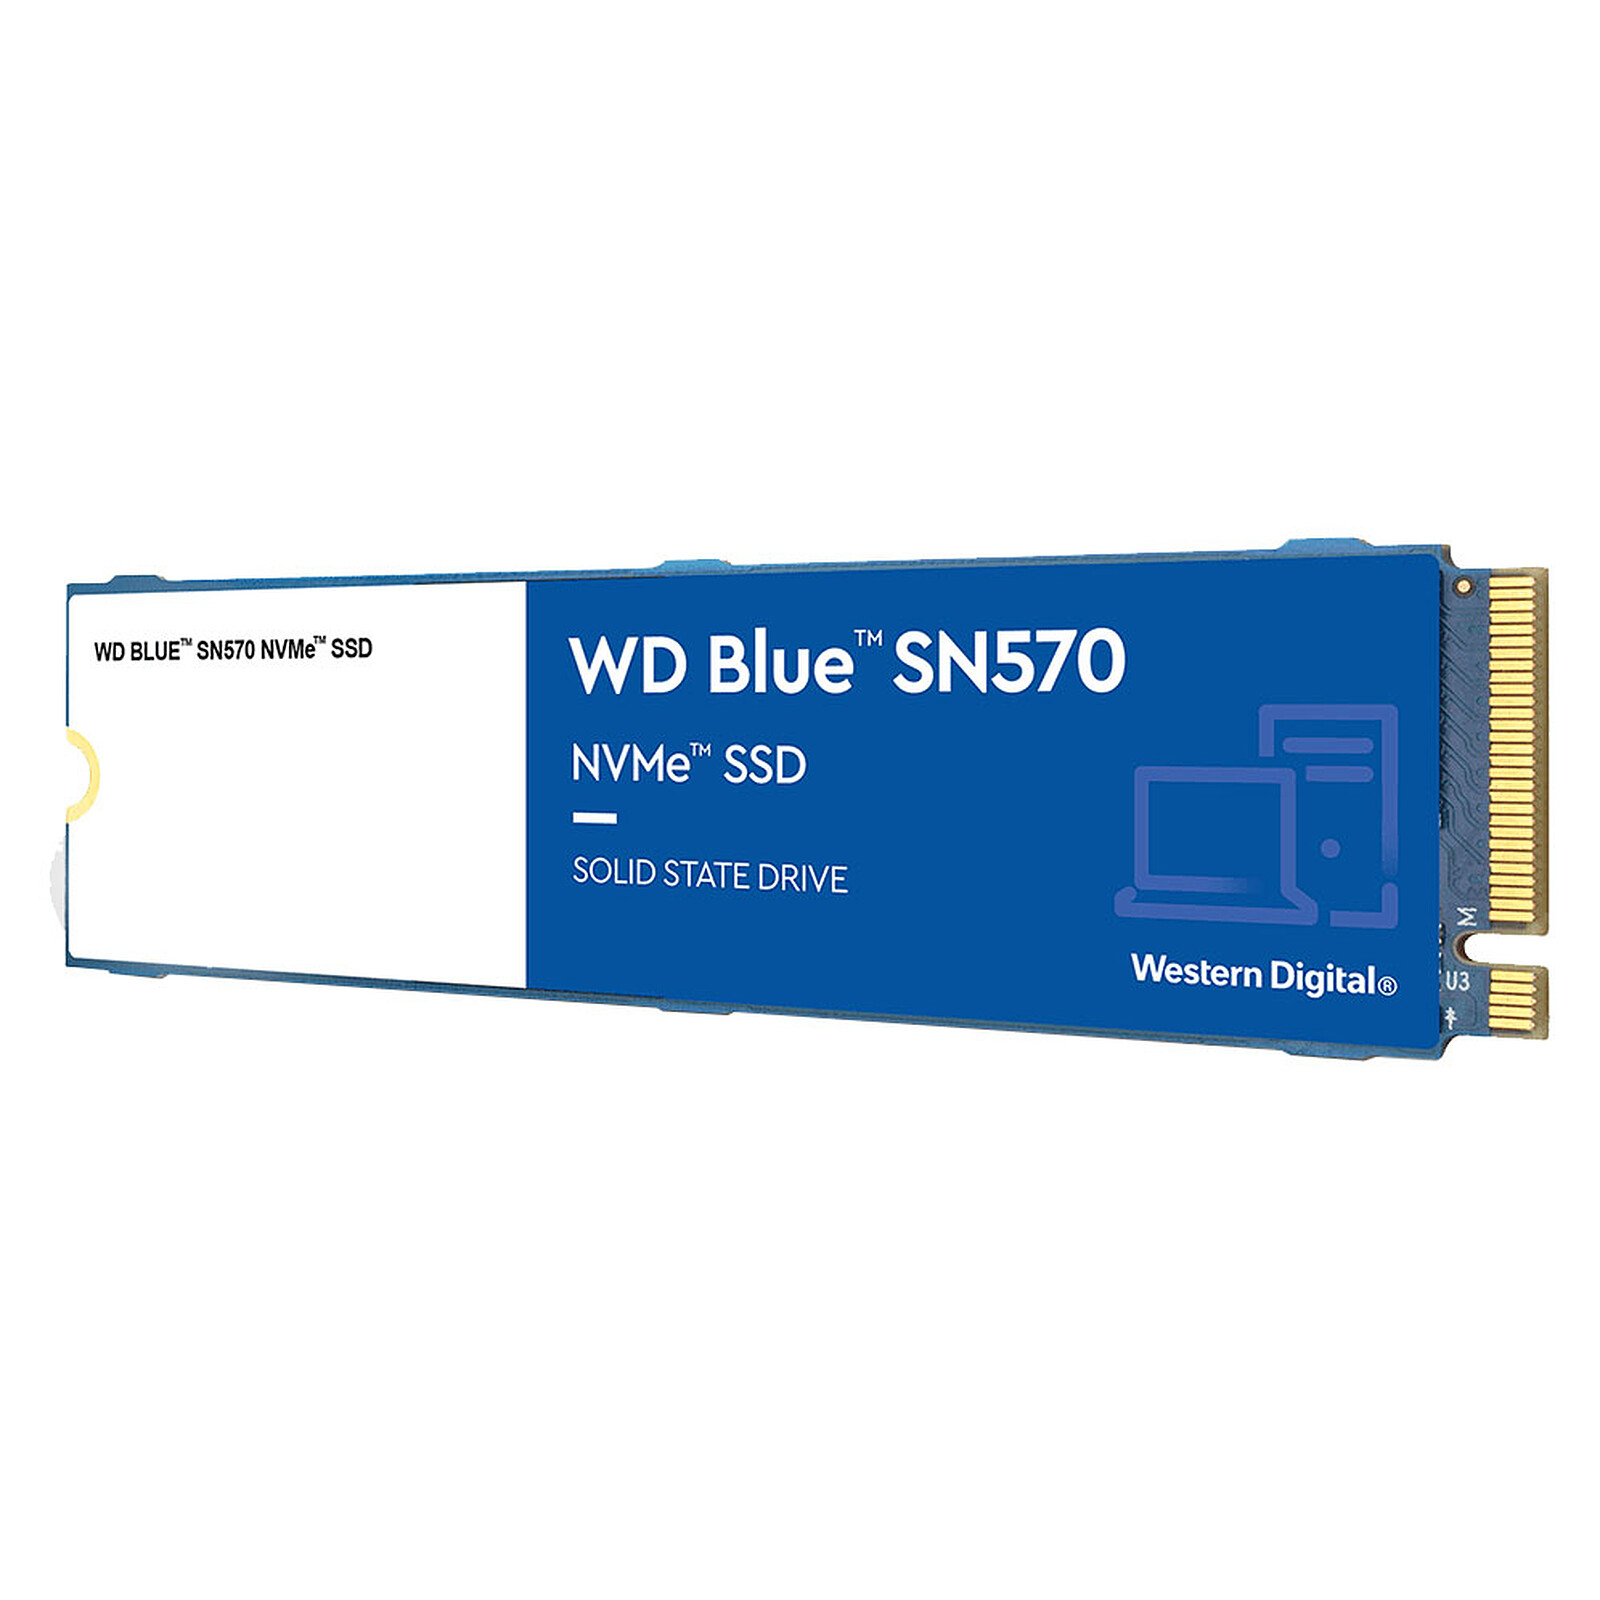 DISQUE INTERNE SSD WD SN570 NVME 1 TERA Algerie El Assli Hi-Tech